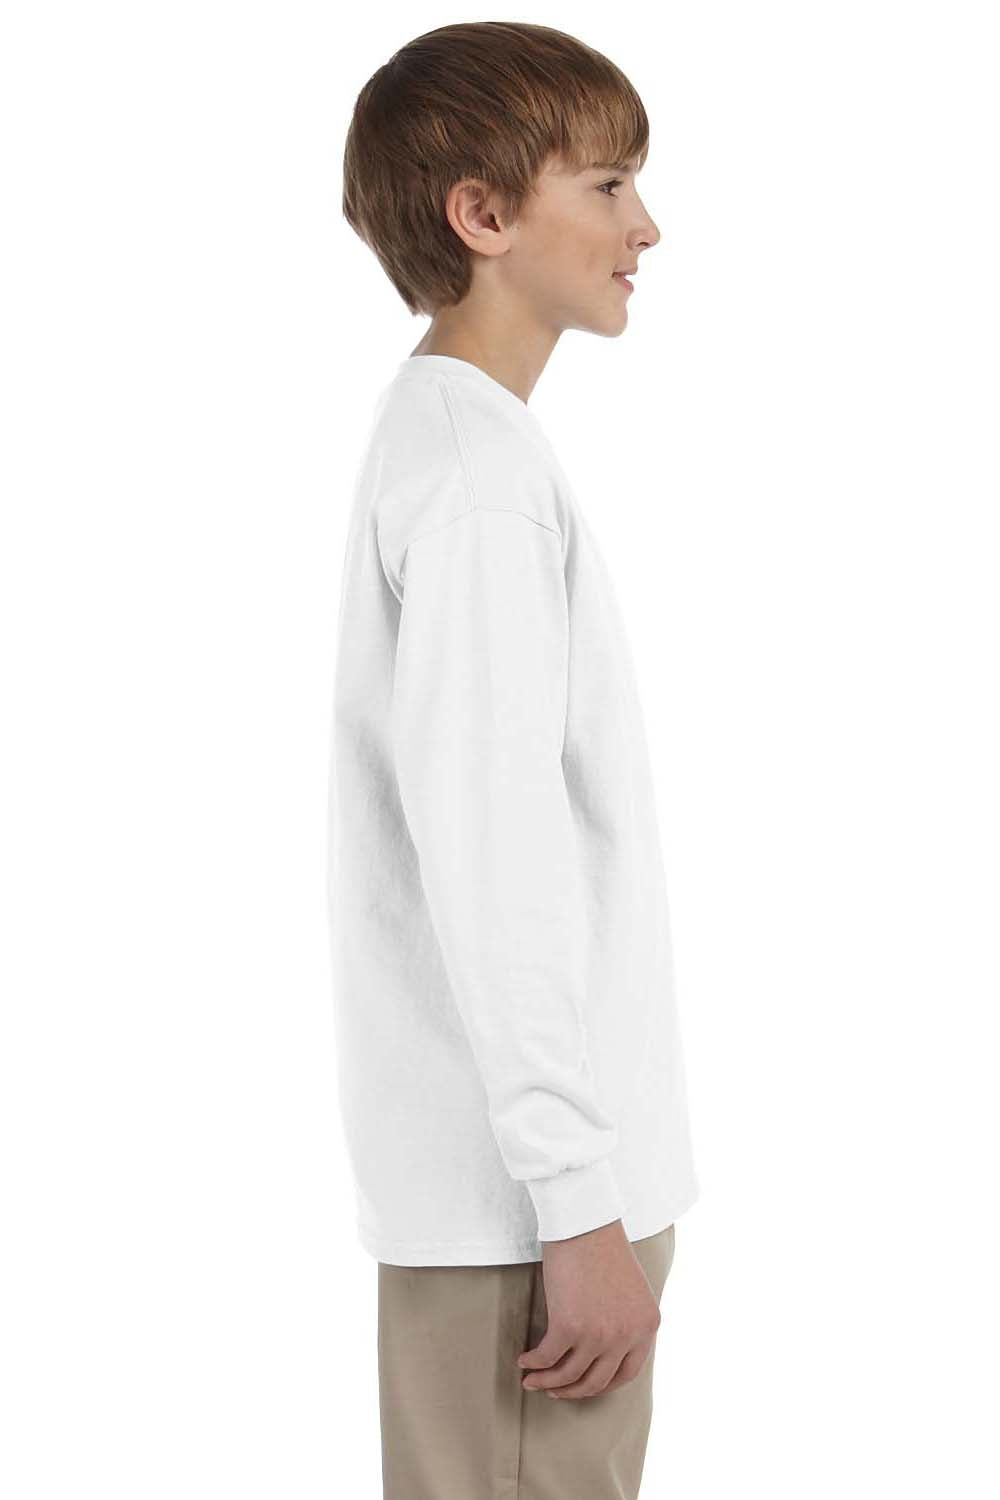 Jerzees 29BL Youth Dri-Power Moisture Wicking Long Sleeve Crewneck T-Shirt White Side